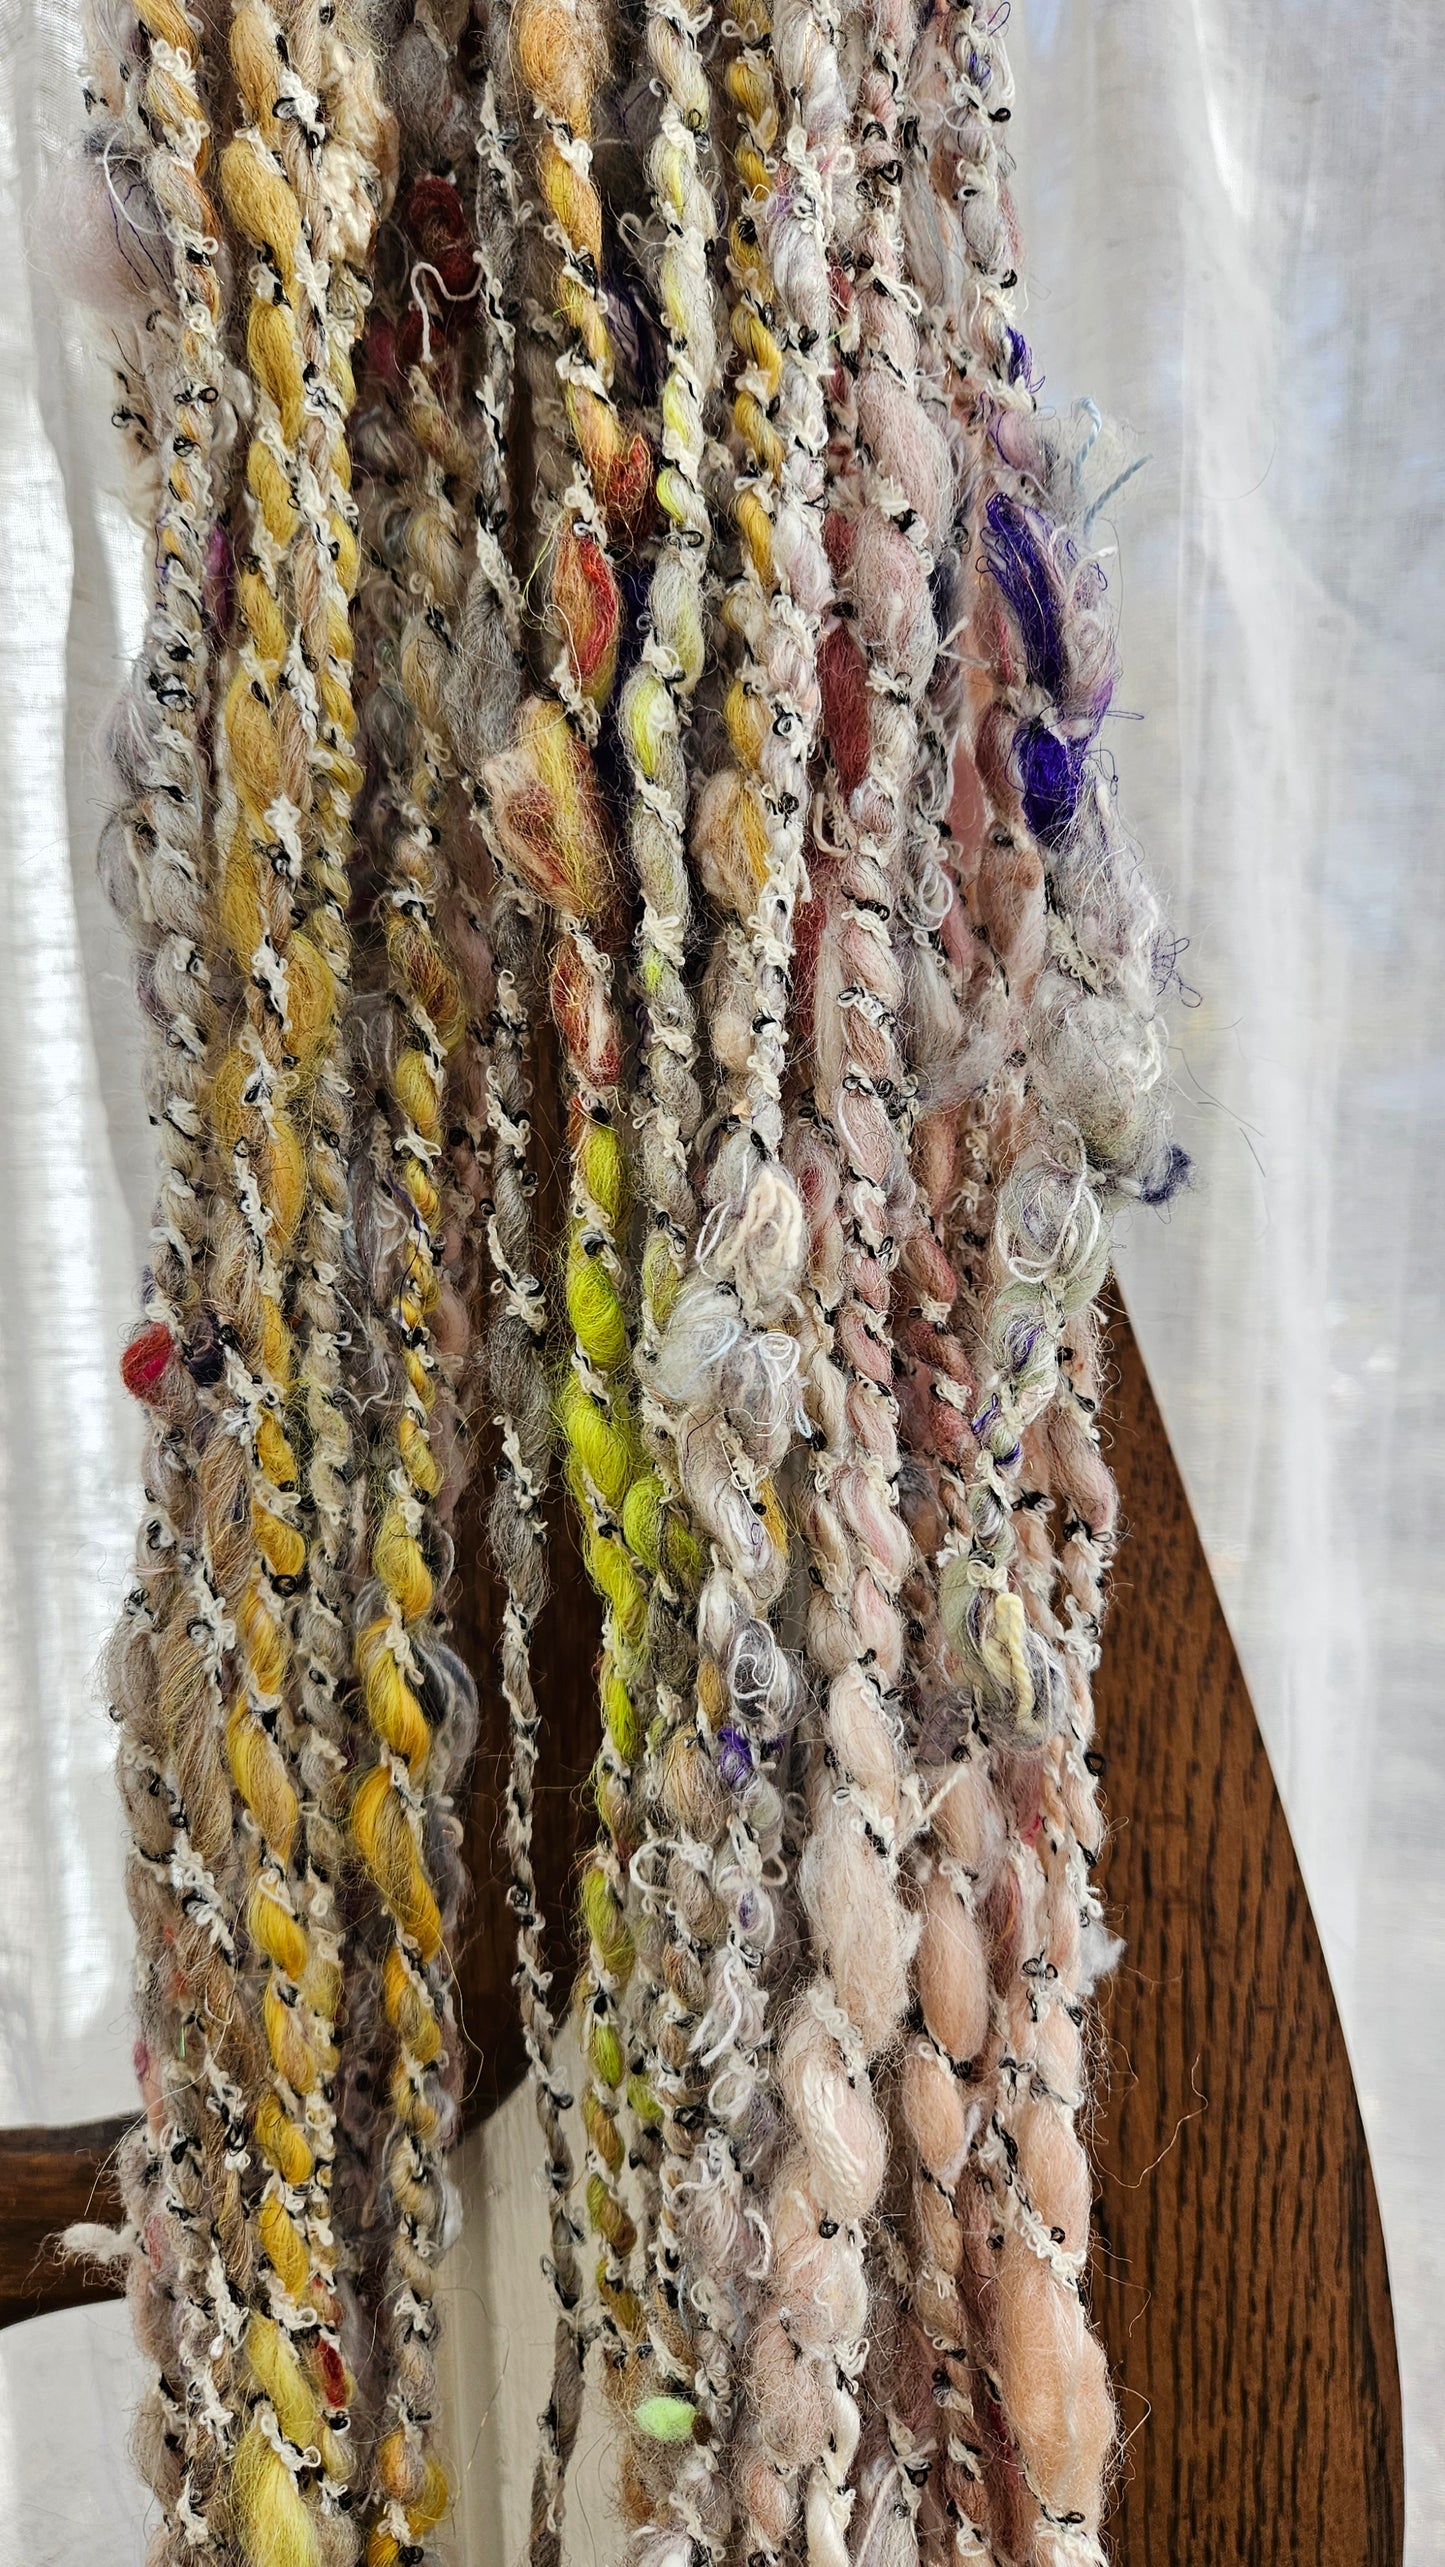 BELOVED TEDDY - Handspun Bulky Wool Textured Art Yarn - 45 Yards 3.2 oz